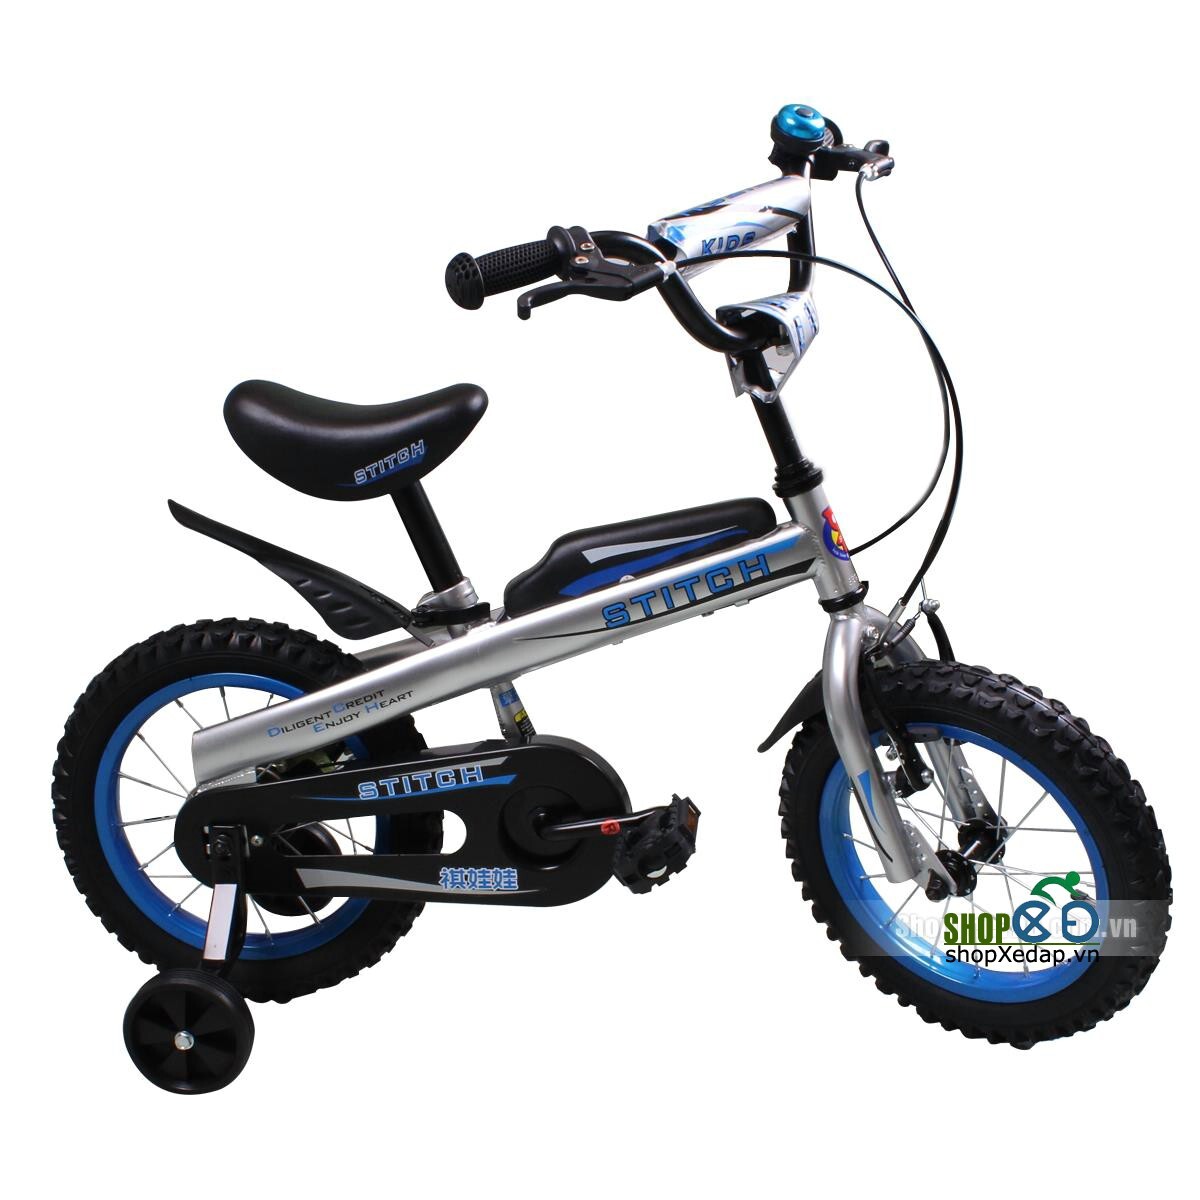 Xe đạp trẻ em Stitch JK 903 14 inch